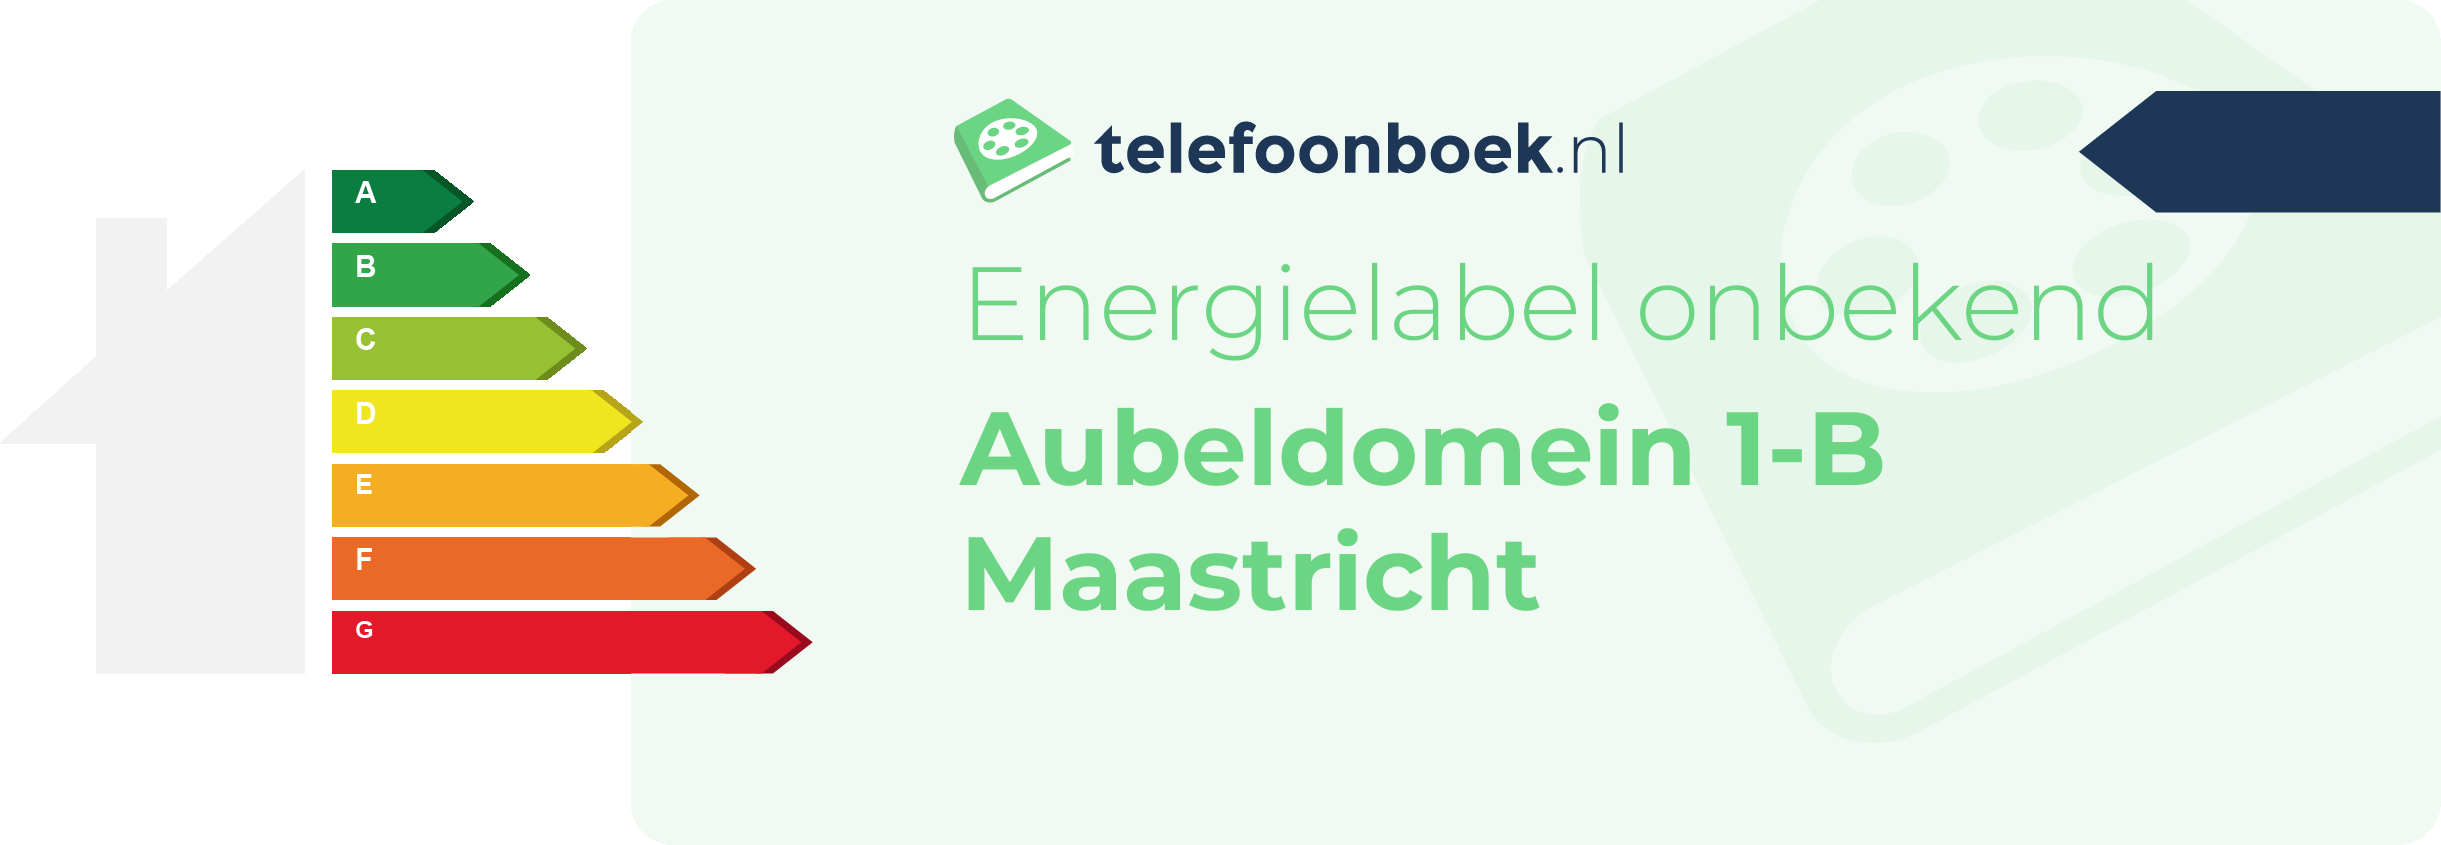 Energielabel Aubeldomein 1-B Maastricht